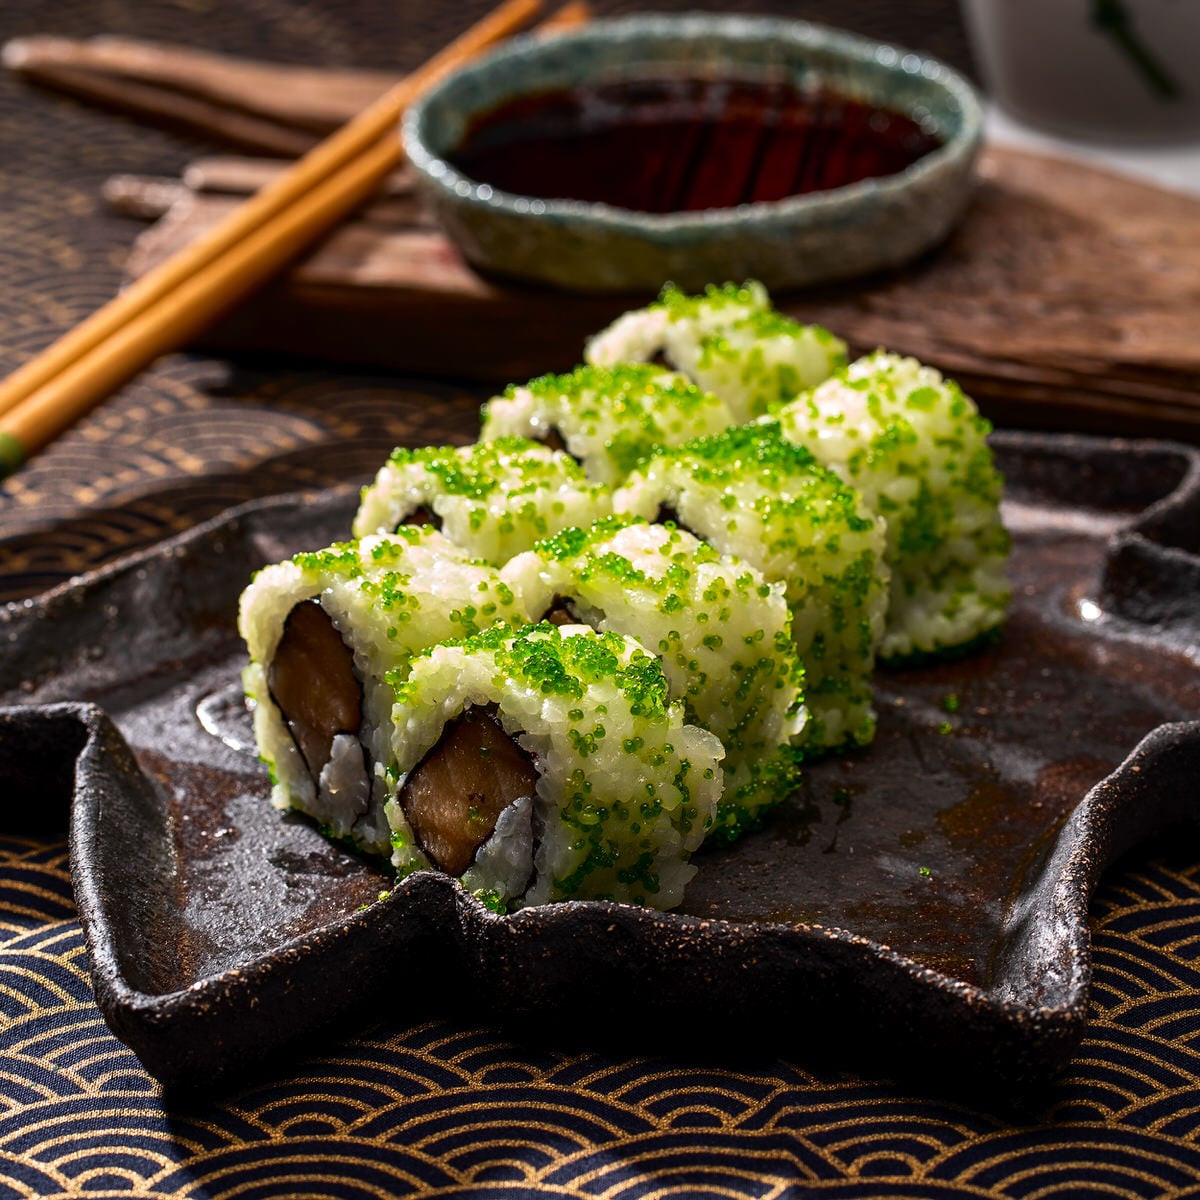 Peixe manteiga com wasabi tobiko